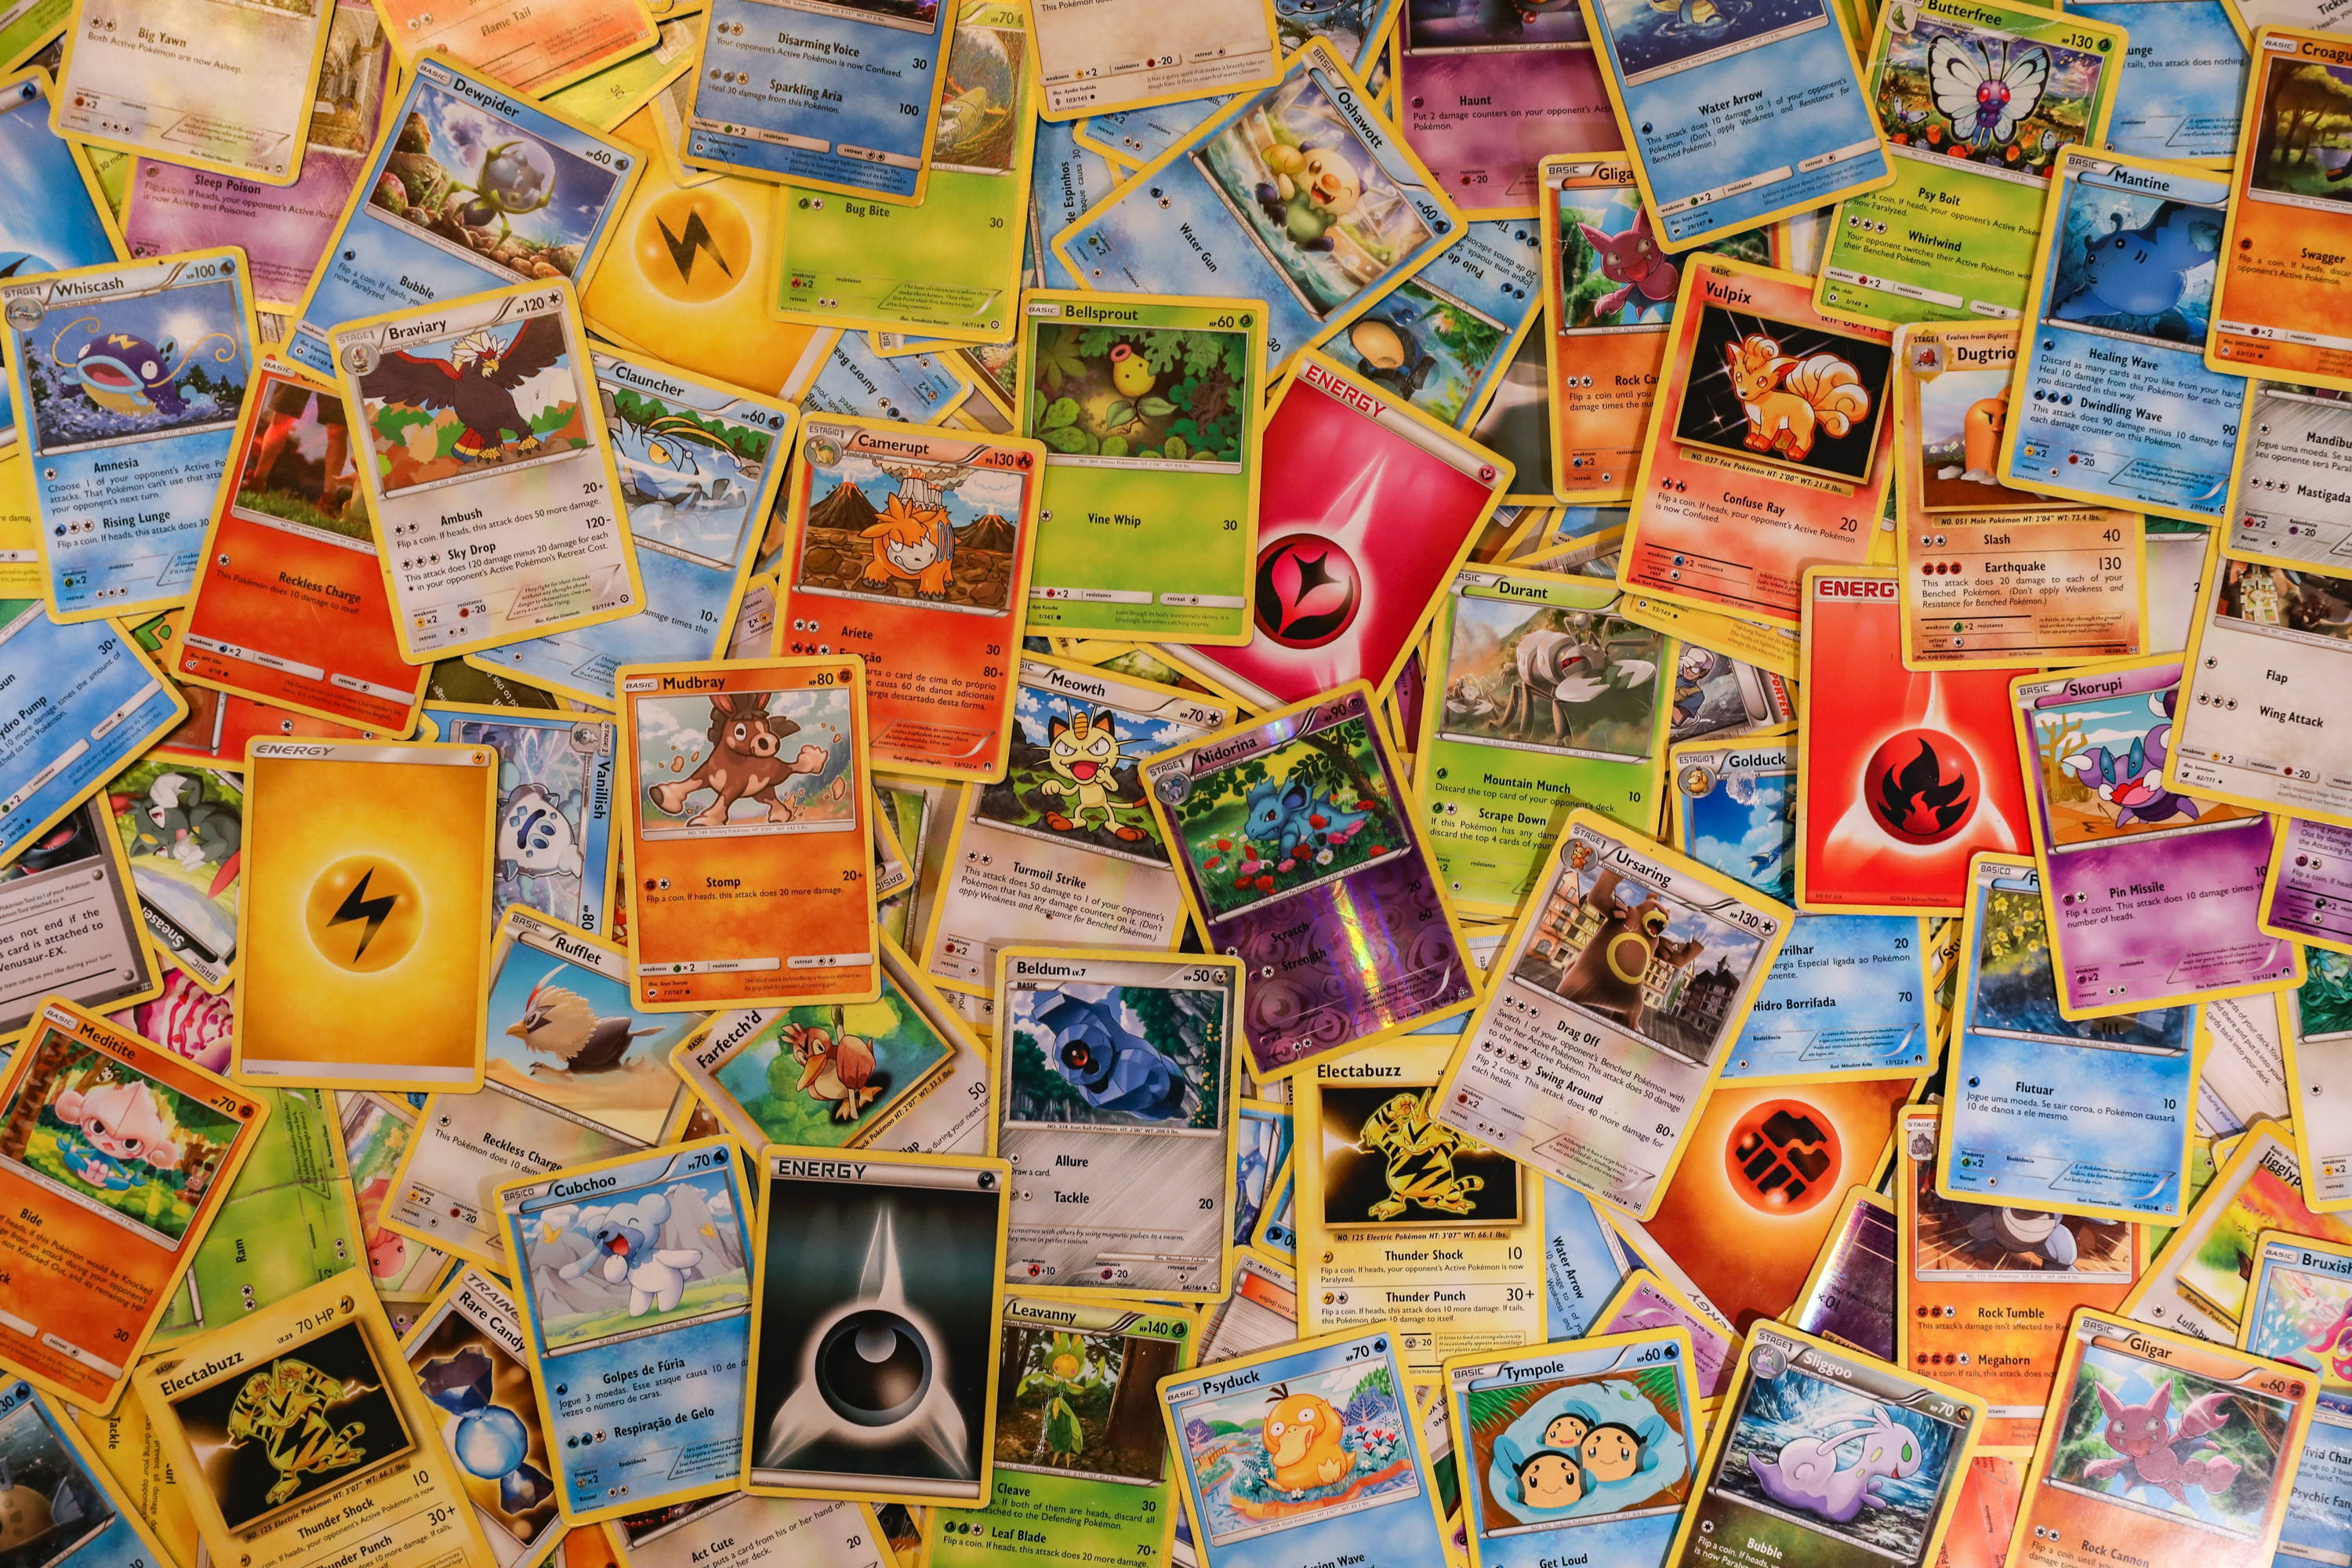 Rare Illustrator Pikachu Pokémon Card Sells For Nearly $1 Million